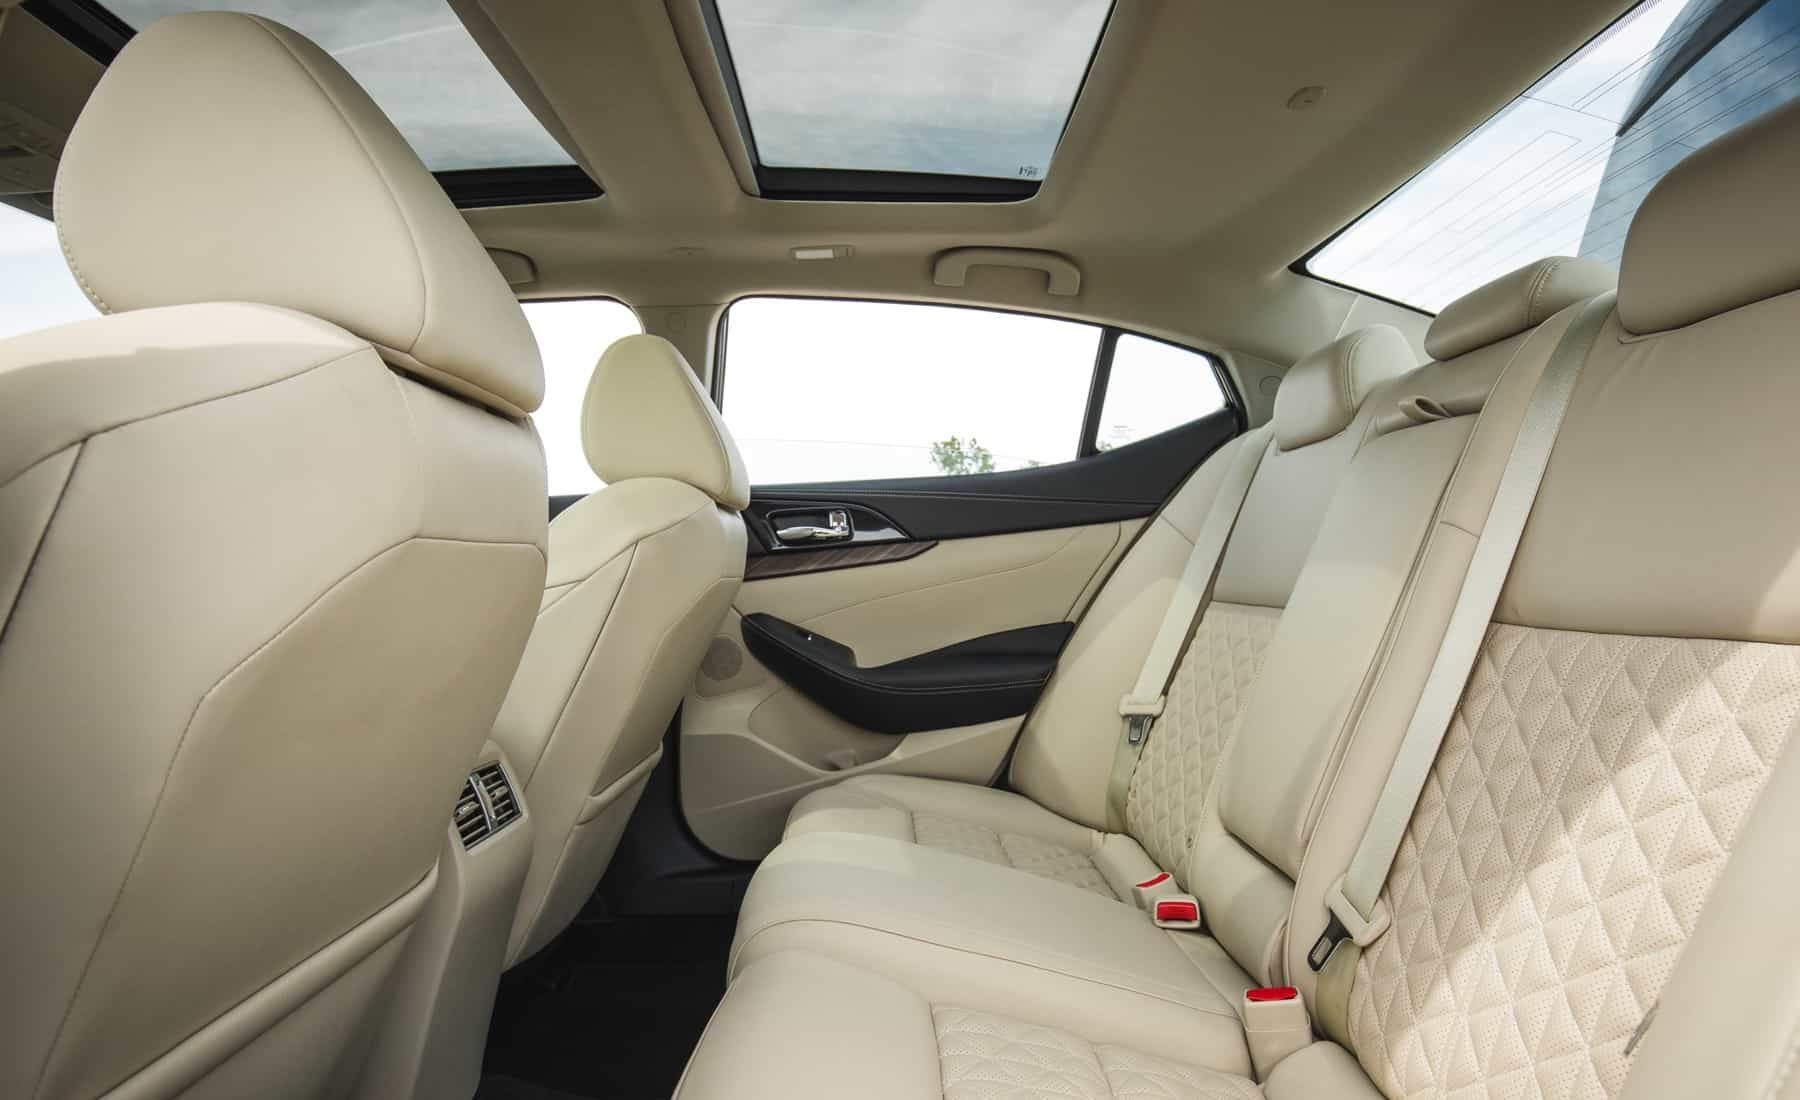 2017 Nissan Maxima Interior Seats Rear (View 5 of 40)